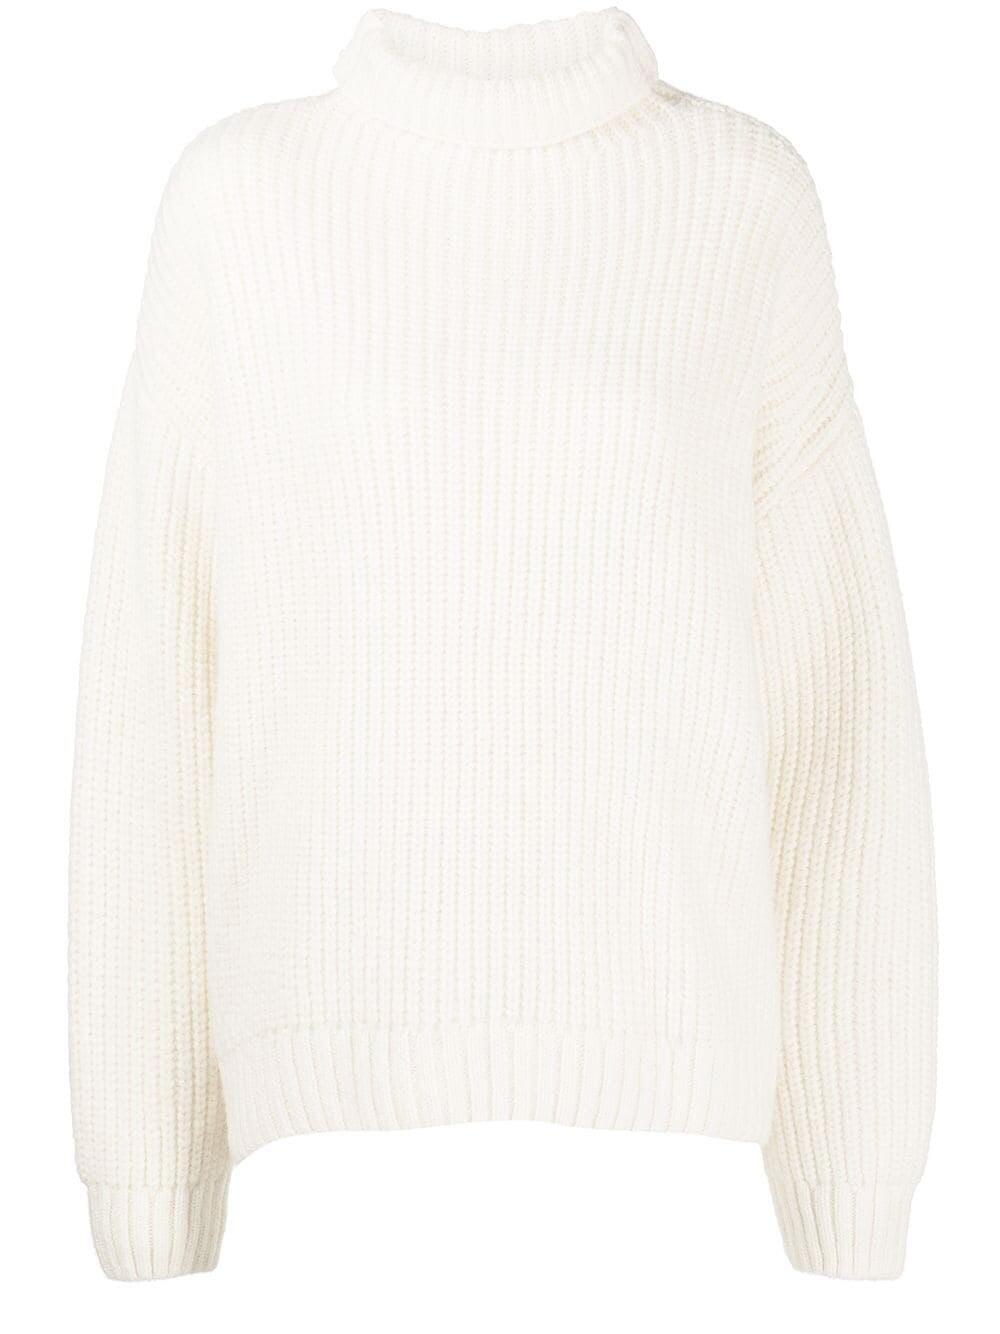 Sydney Sweater (Cream) | style